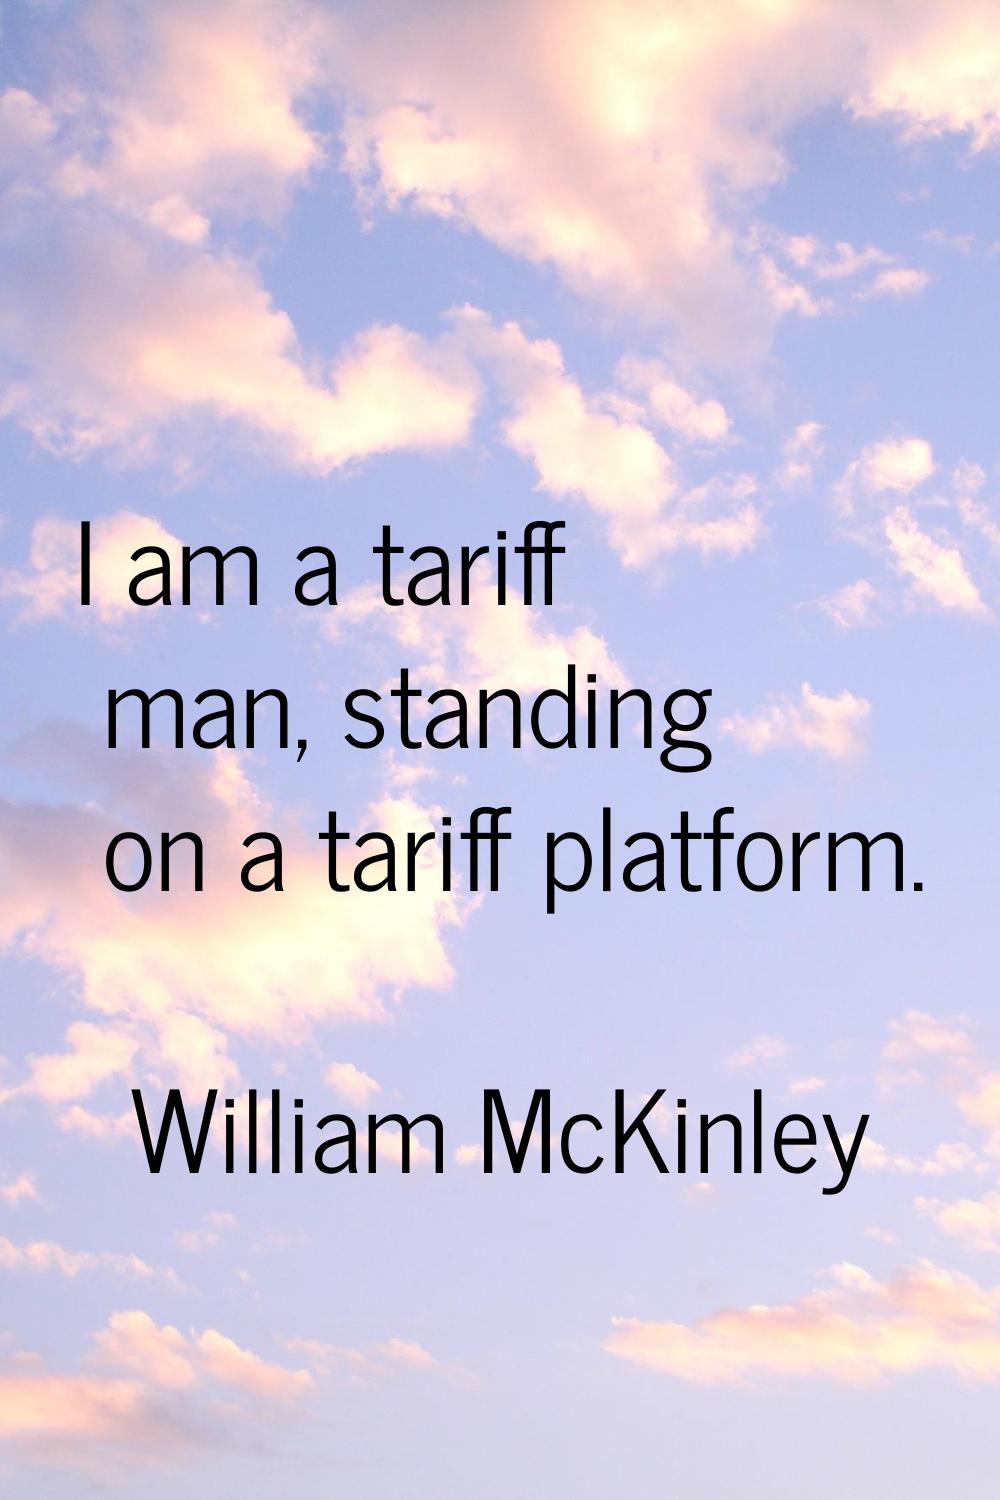 I am a tariff man, standing on a tariff platform.